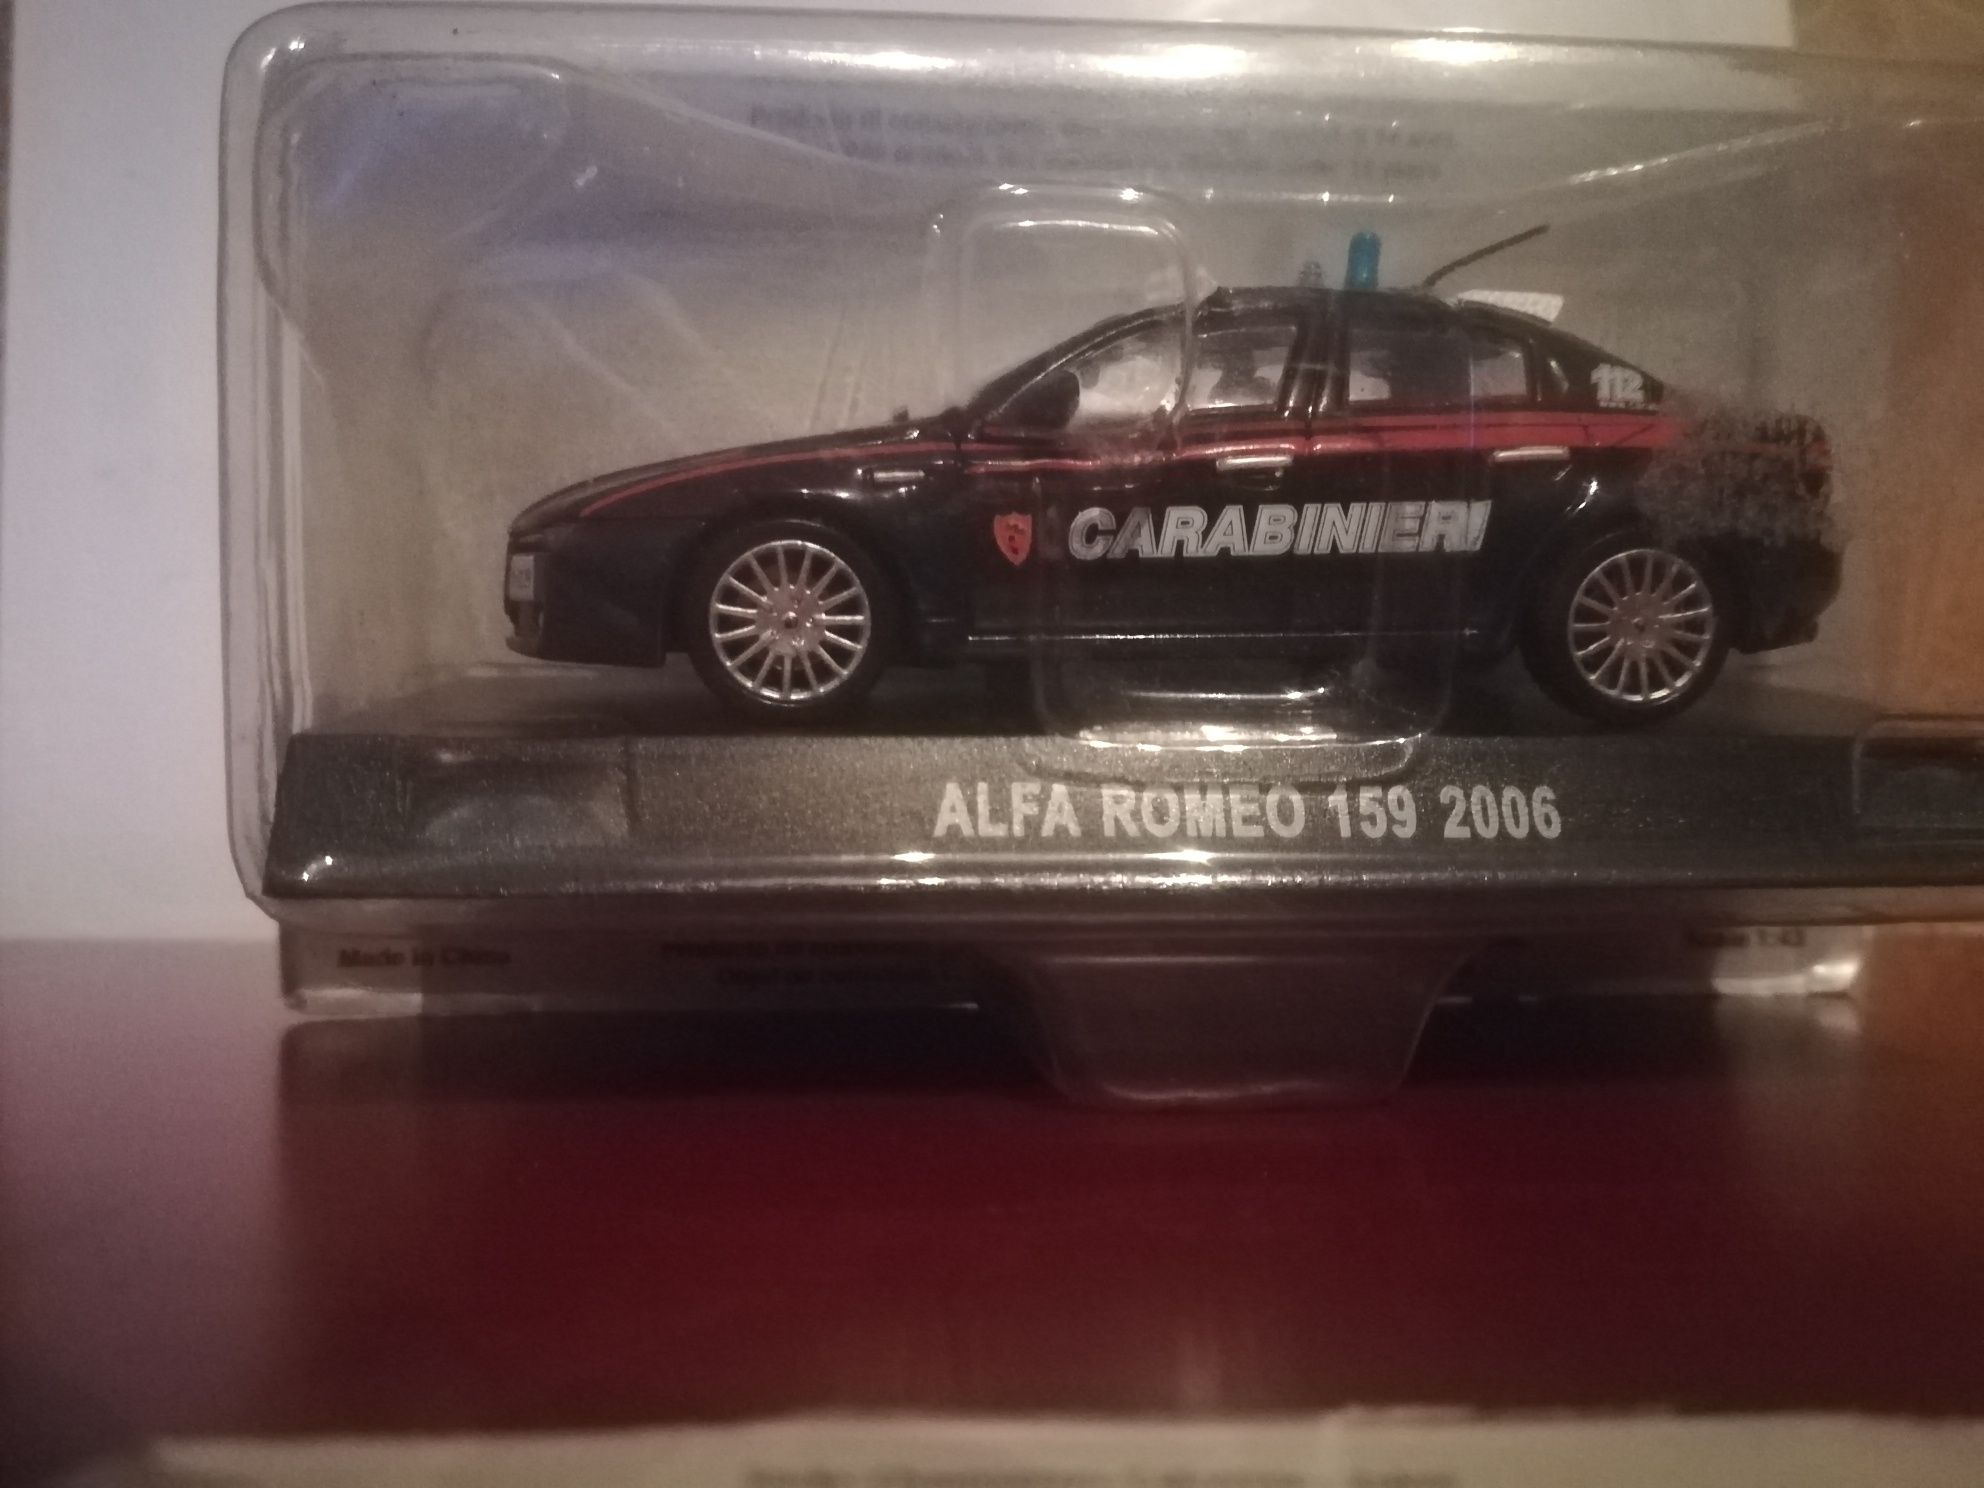 Vand macheta Alfa Romeo 159 carabinieri